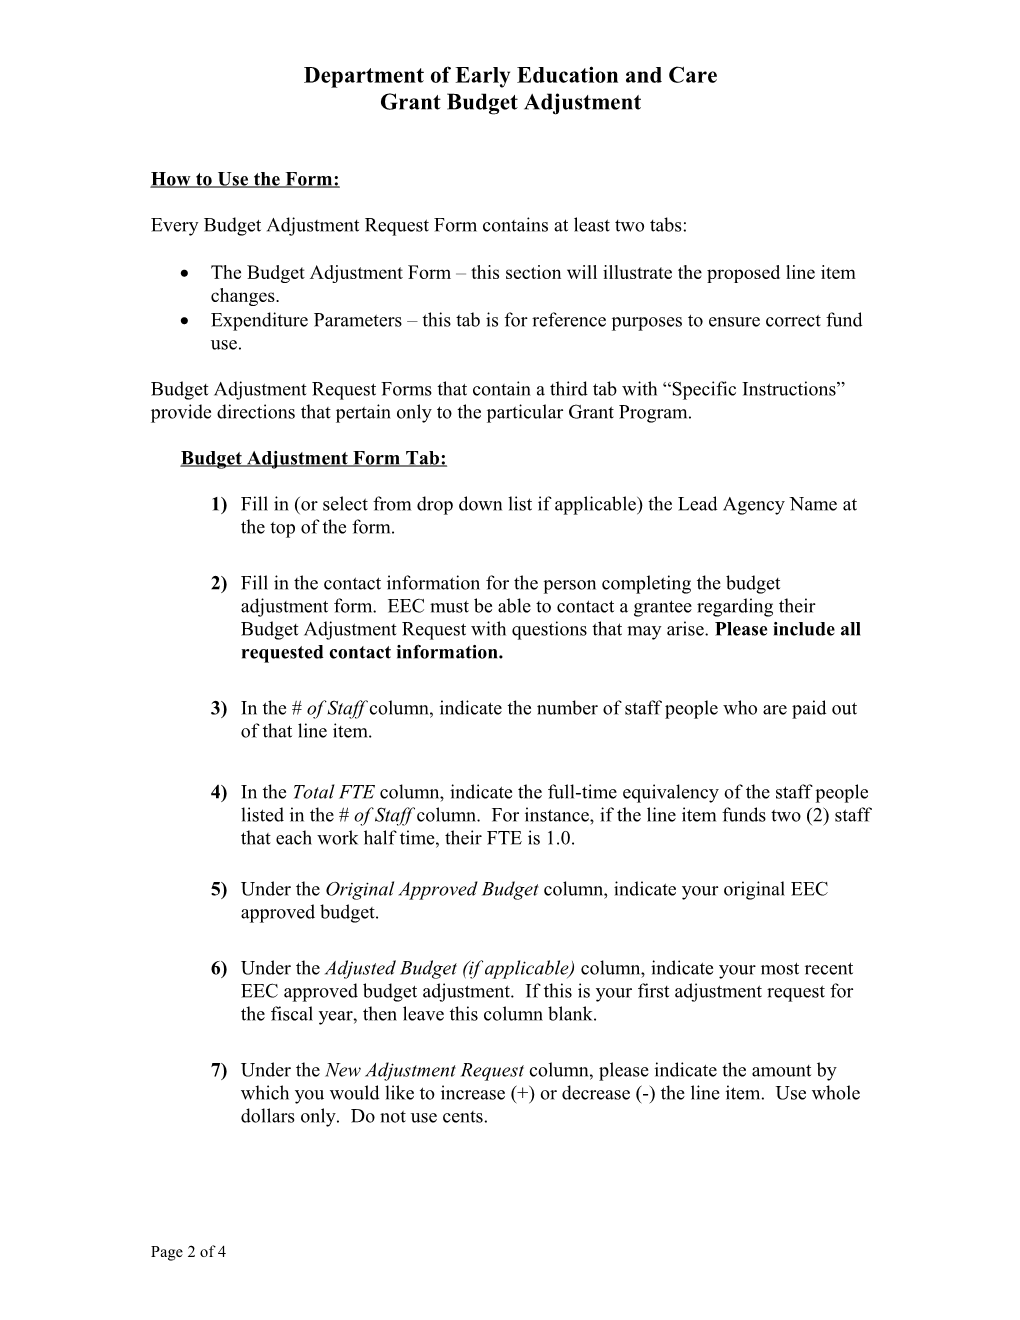 FY 2007 CPC Revised Budget Amendment Instructions